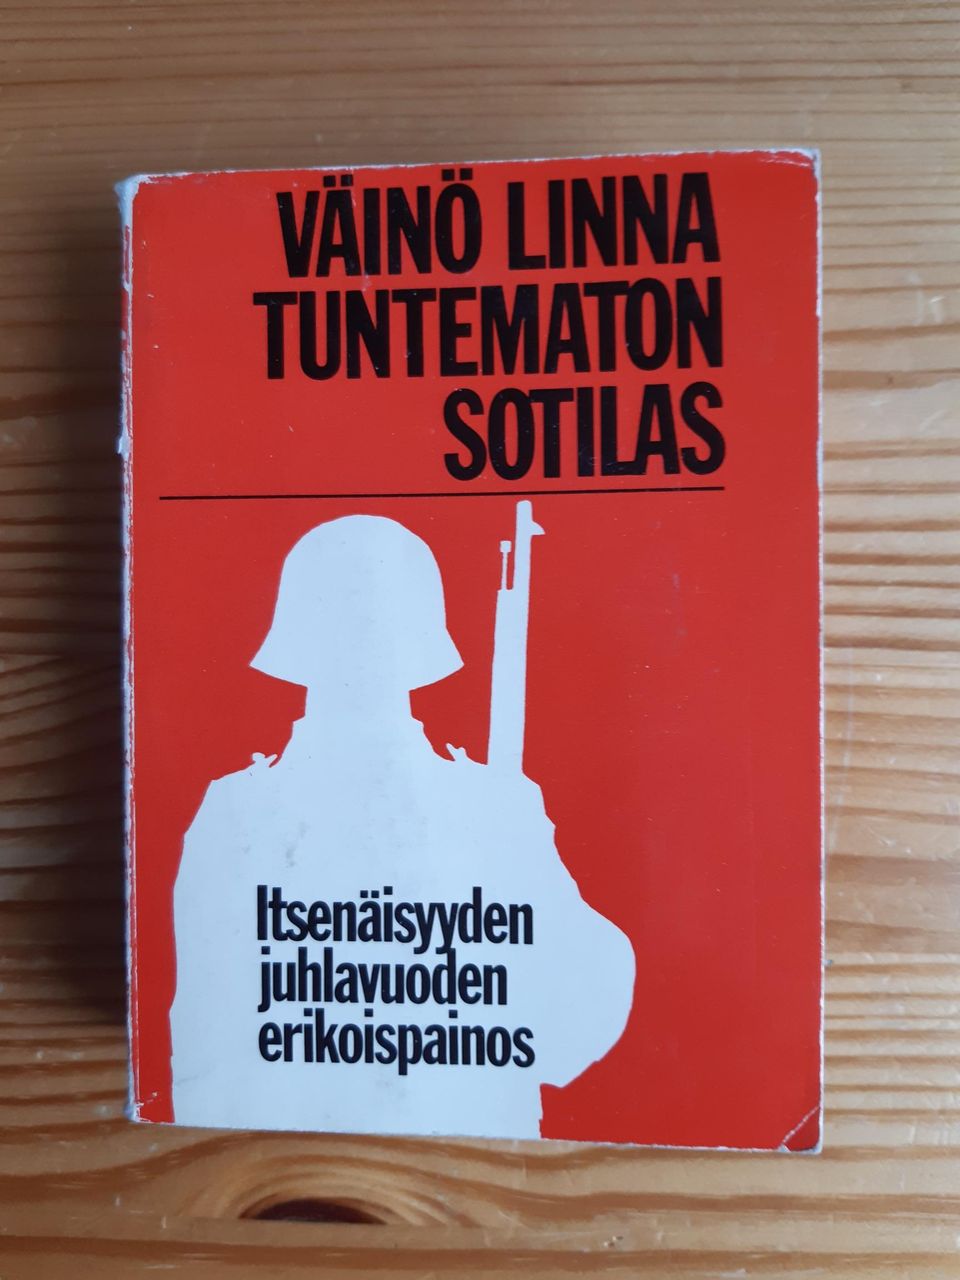 Tuntematon sotilas, Väinö Linna 1977 WSOY Juva